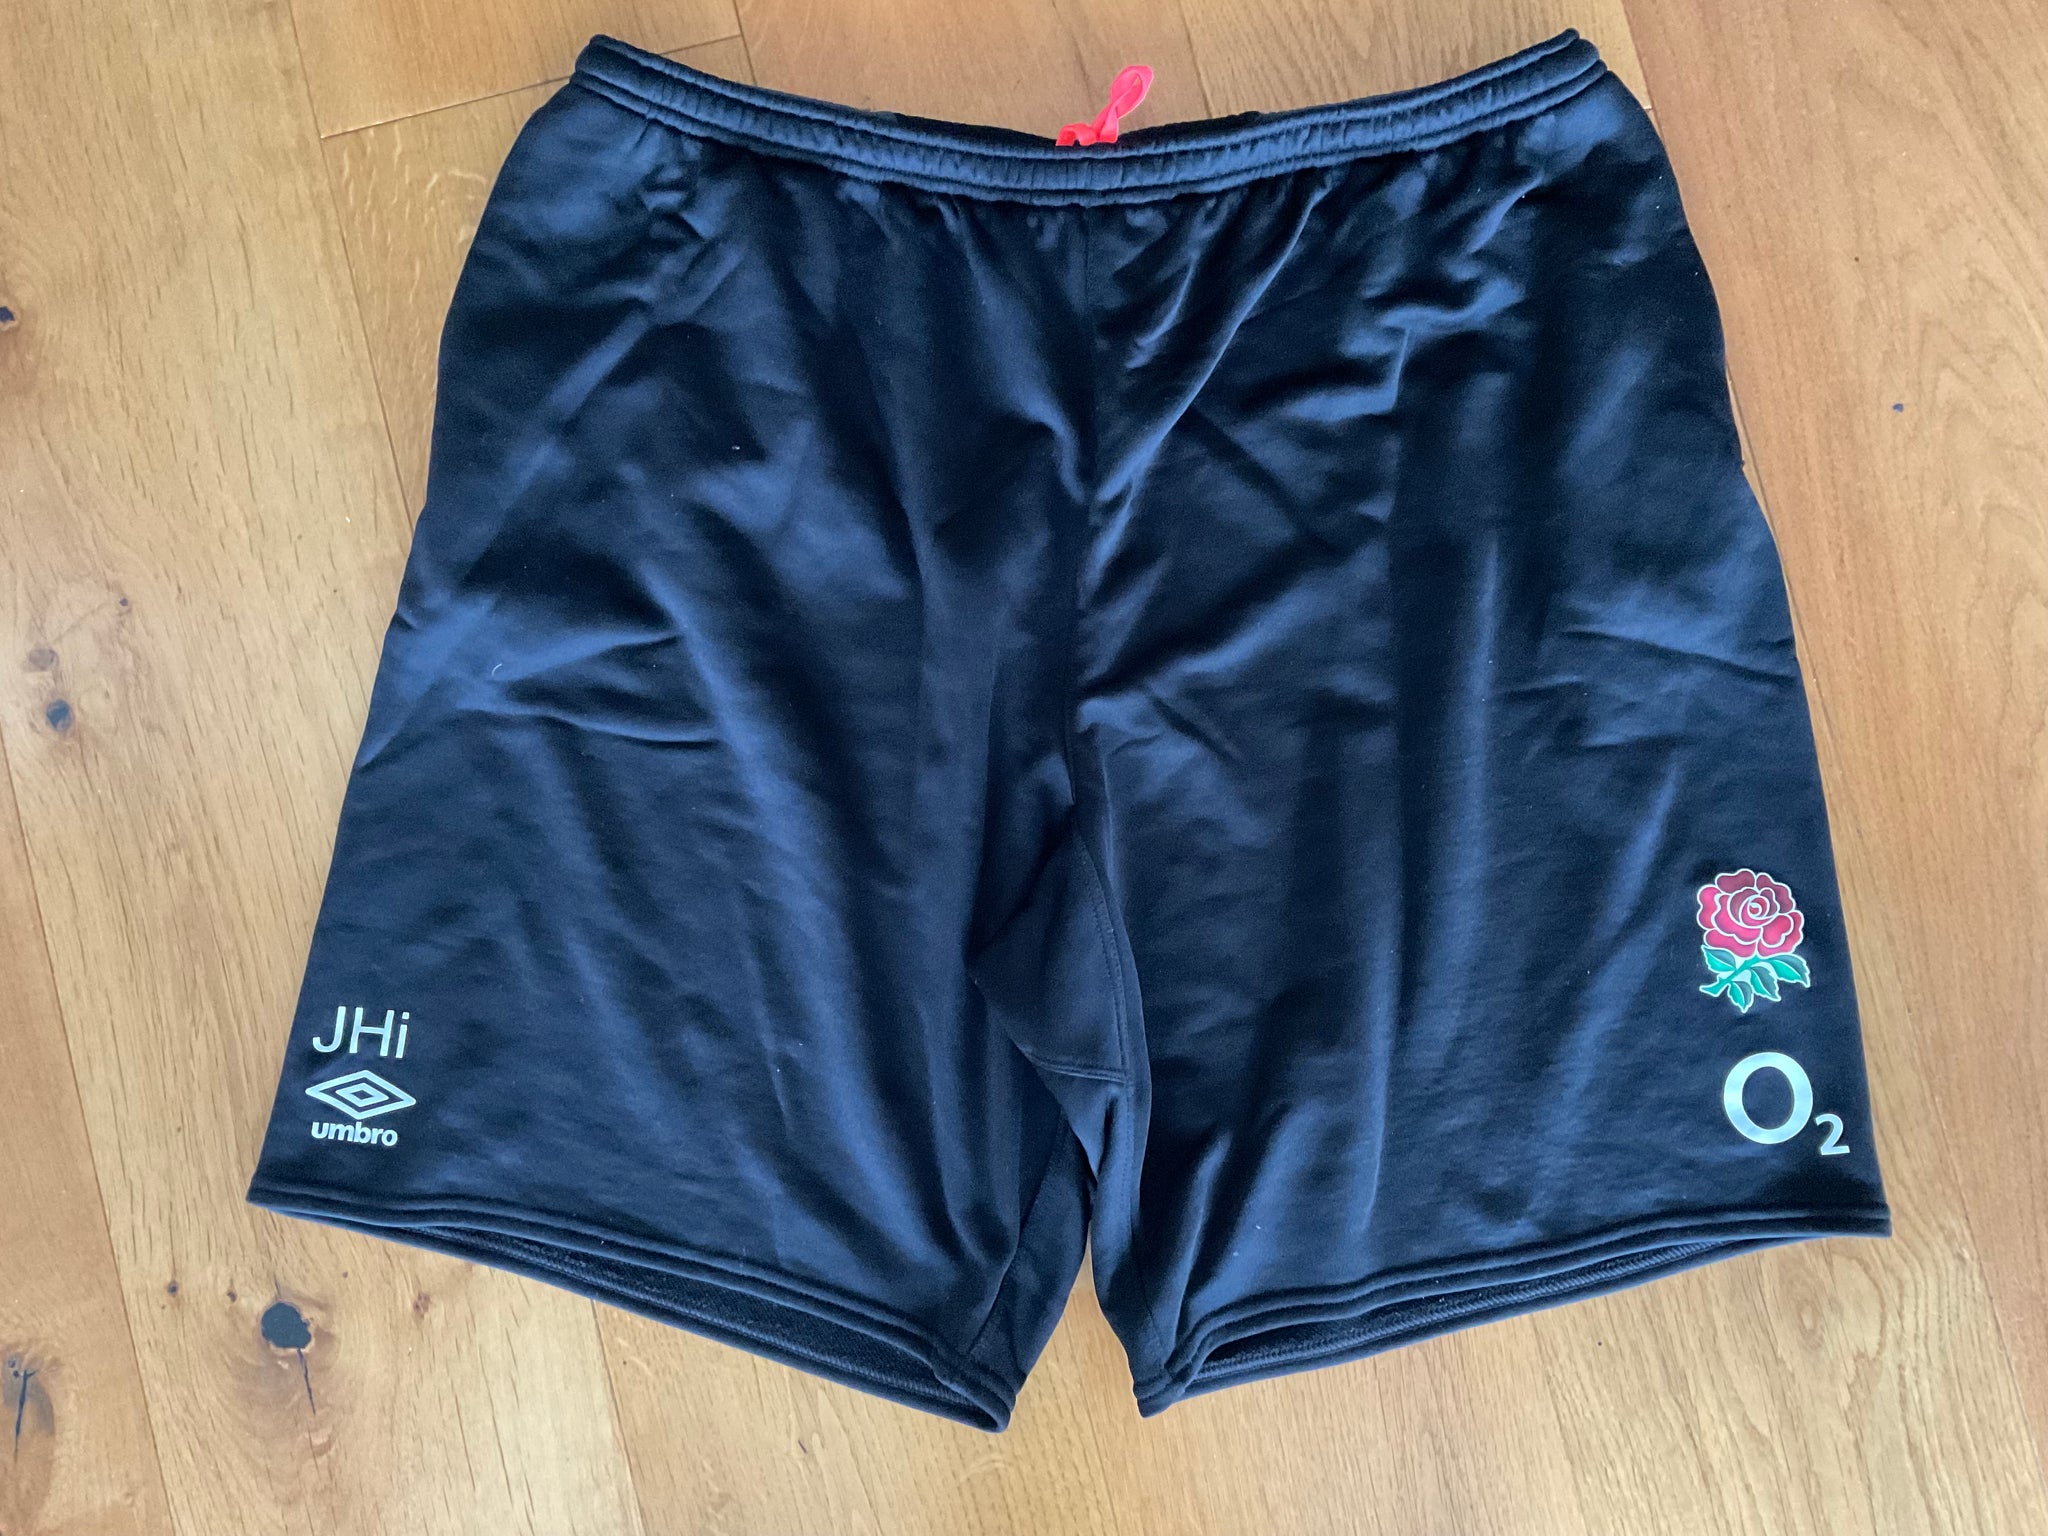 Jonny Hill - England Rugby Heavyweight Gym Shorts  [Black]